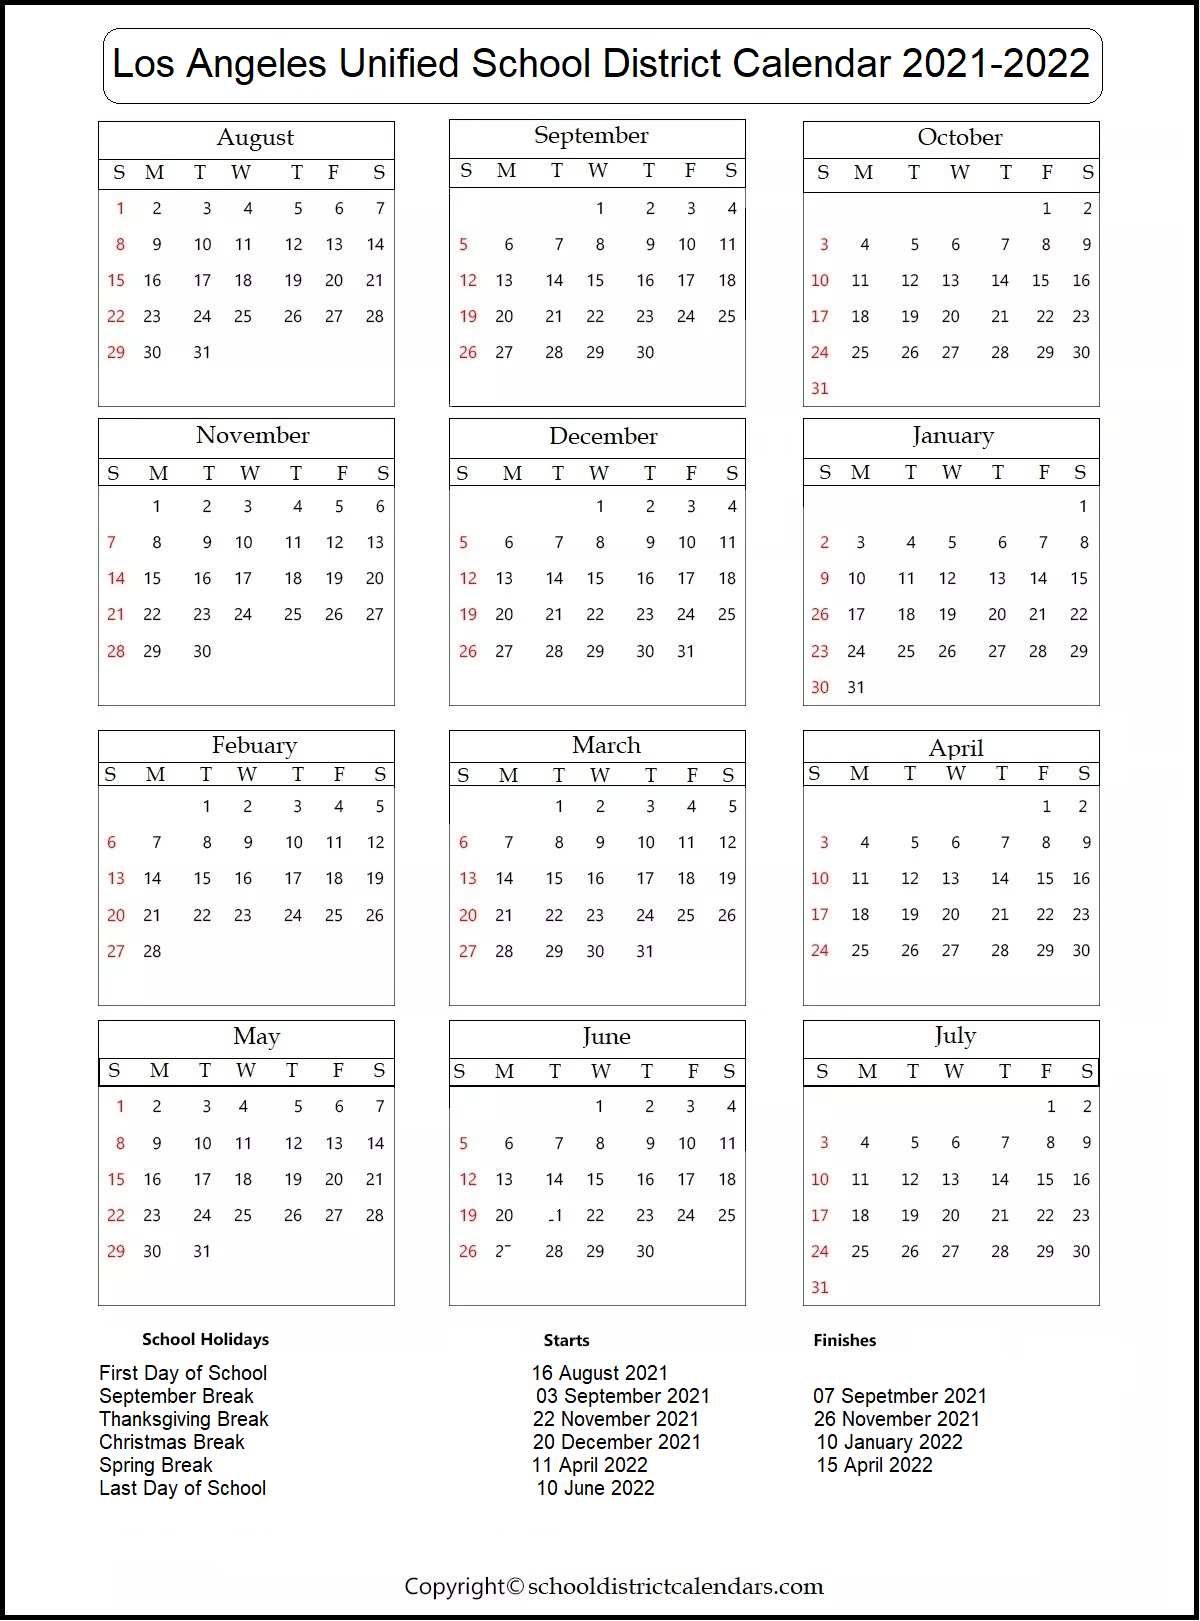 Los Angeles Unified School District Calendar 2021-2022